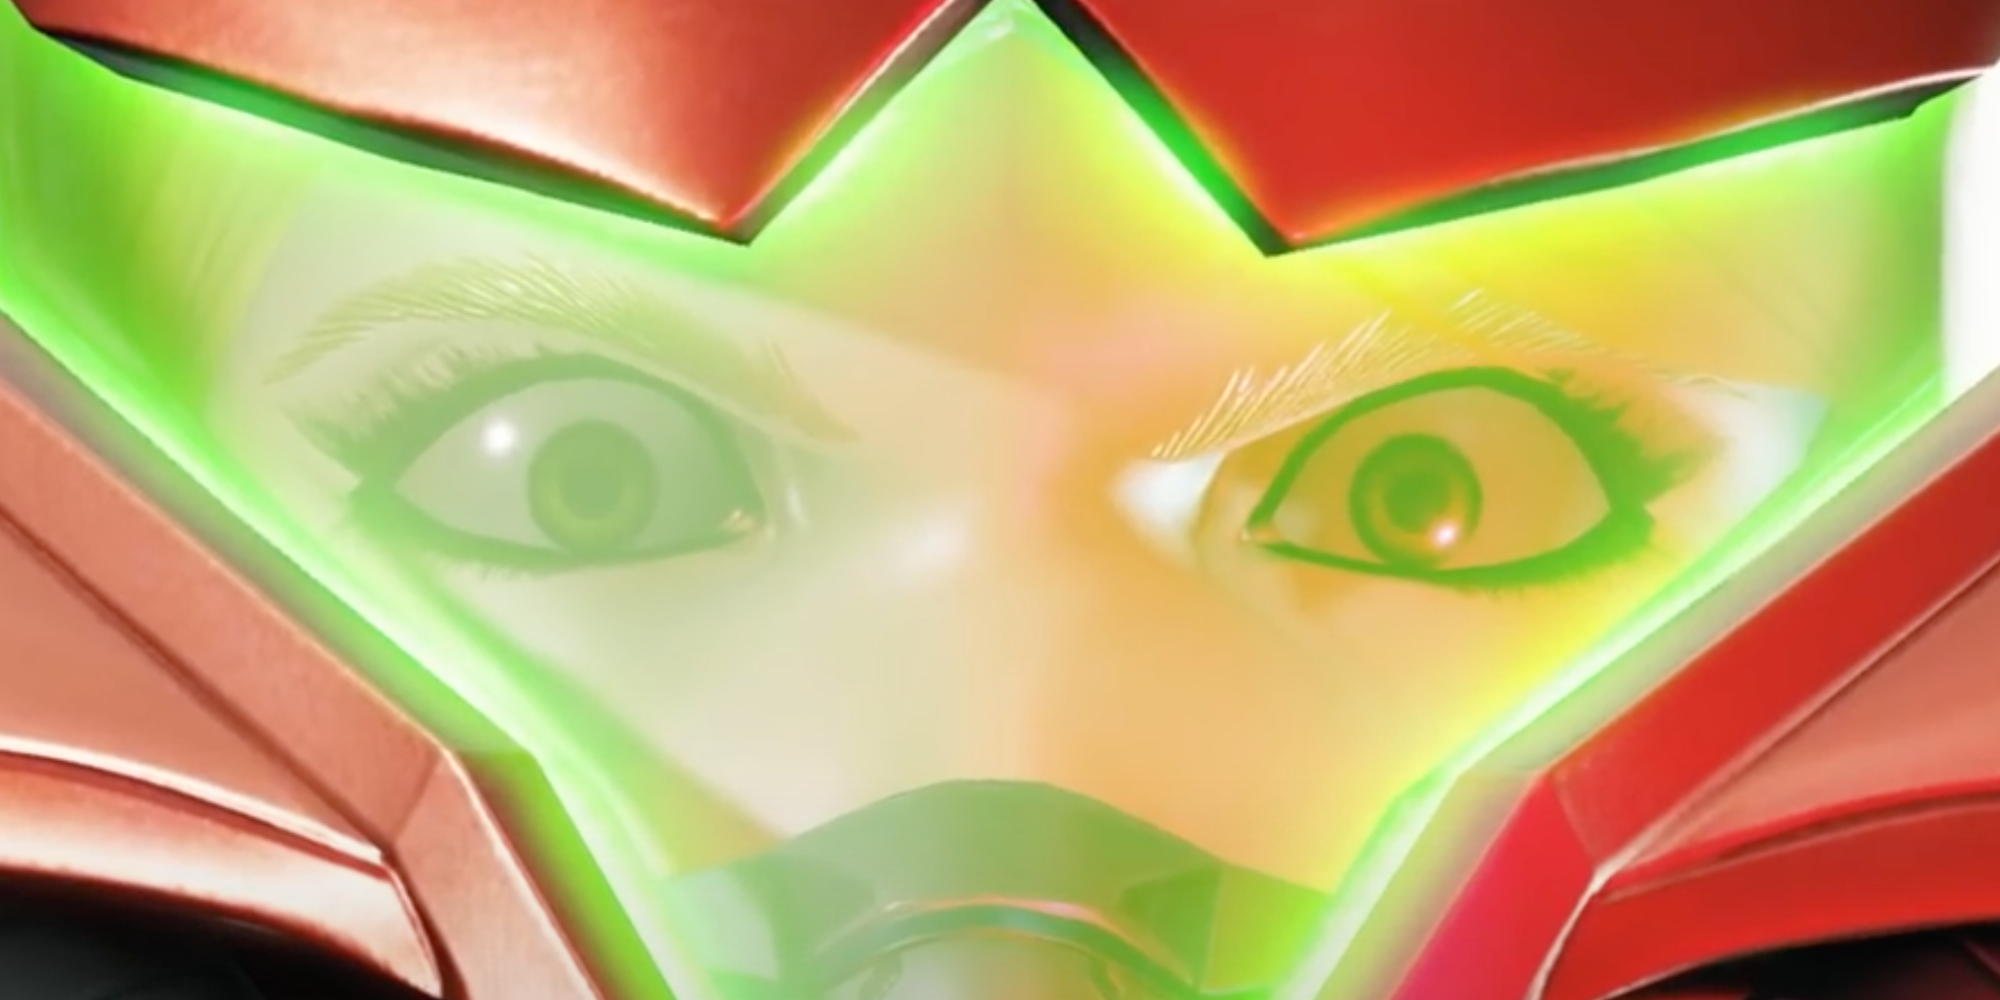 Samus' Eyes Closeup – Metroid Dread Overview Trailer